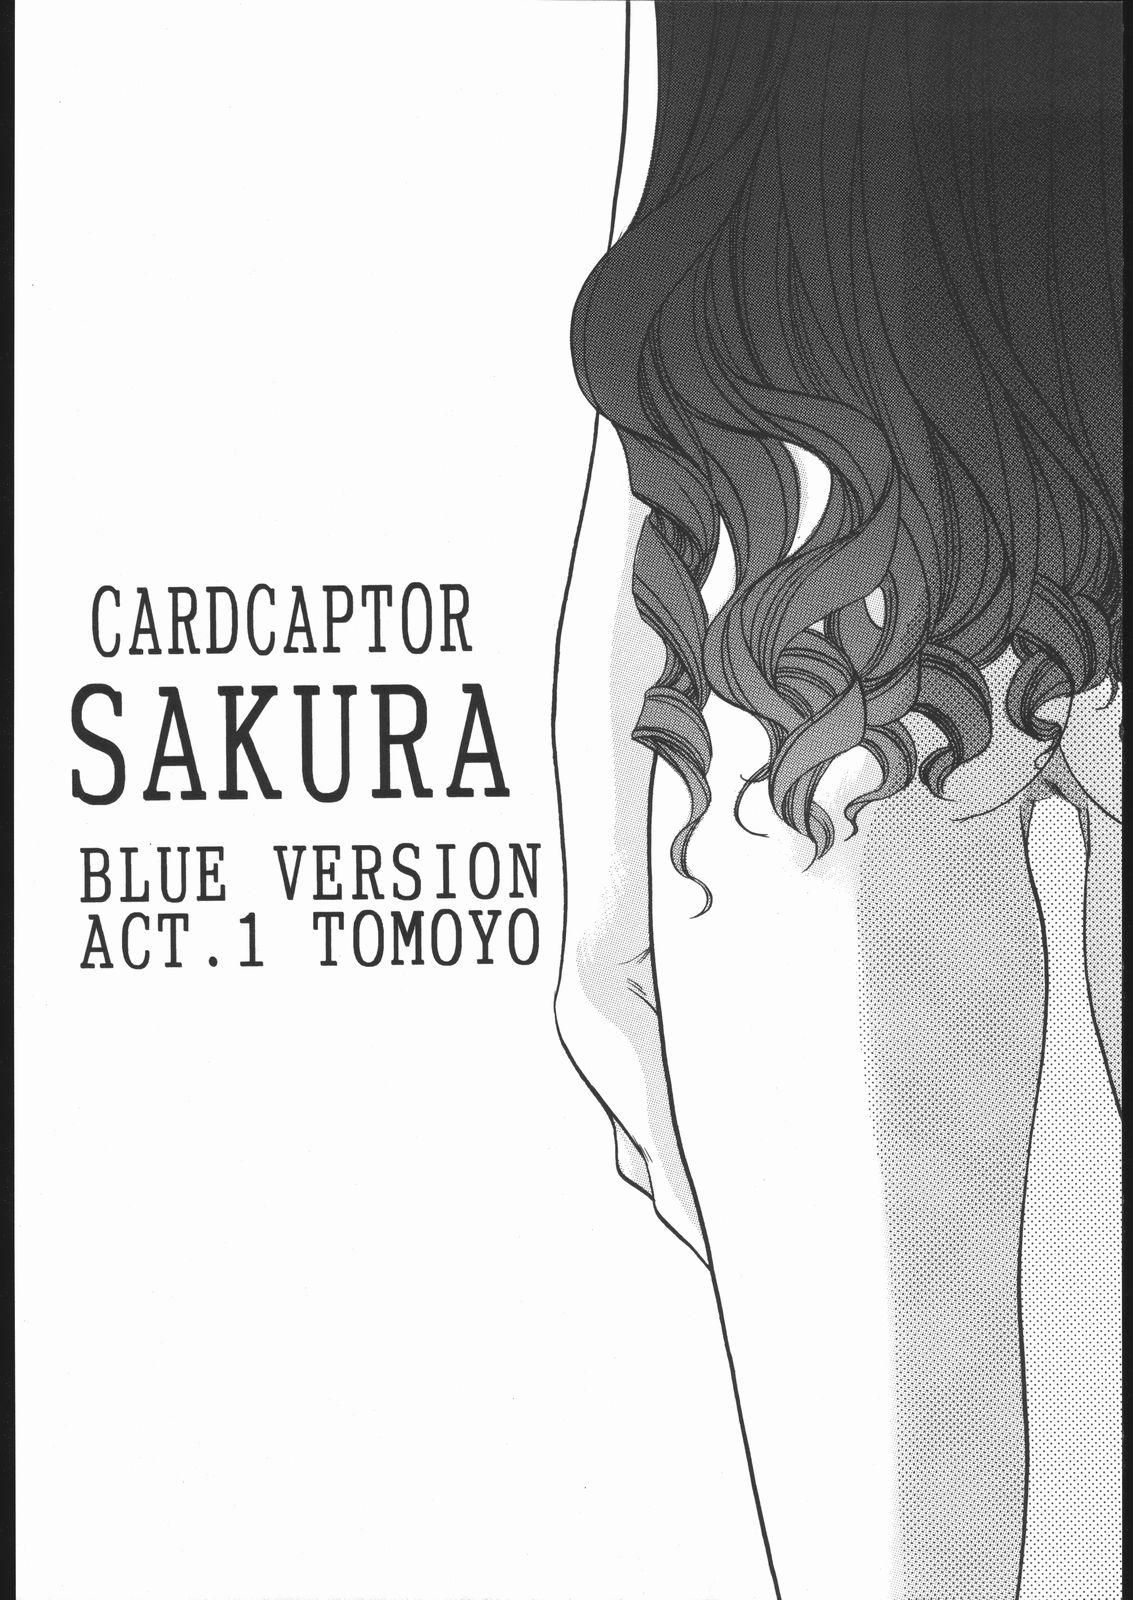 Polish Card Captor Sakura Blue Version - Cardcaptor sakura Muscular - Page 5